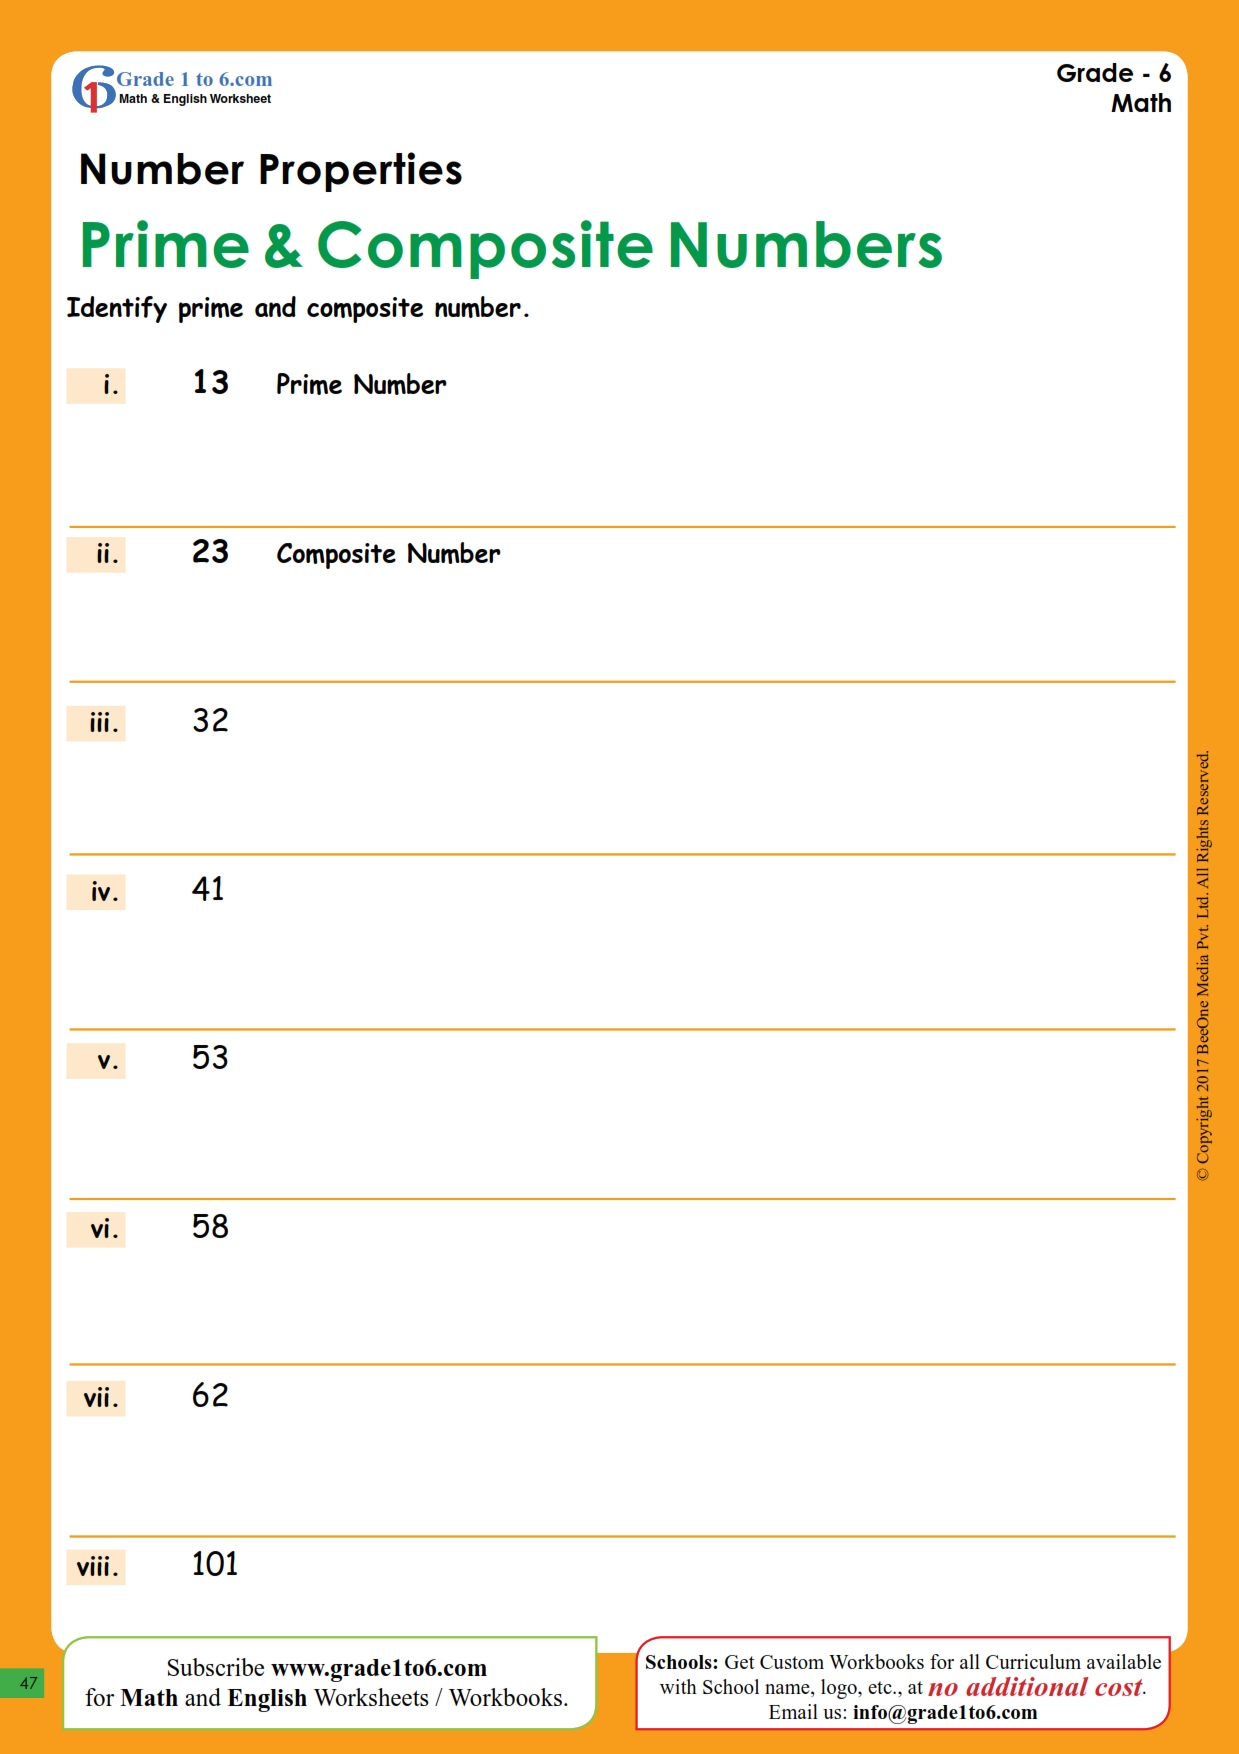 Prime Numbers Worksheet For Grade 6